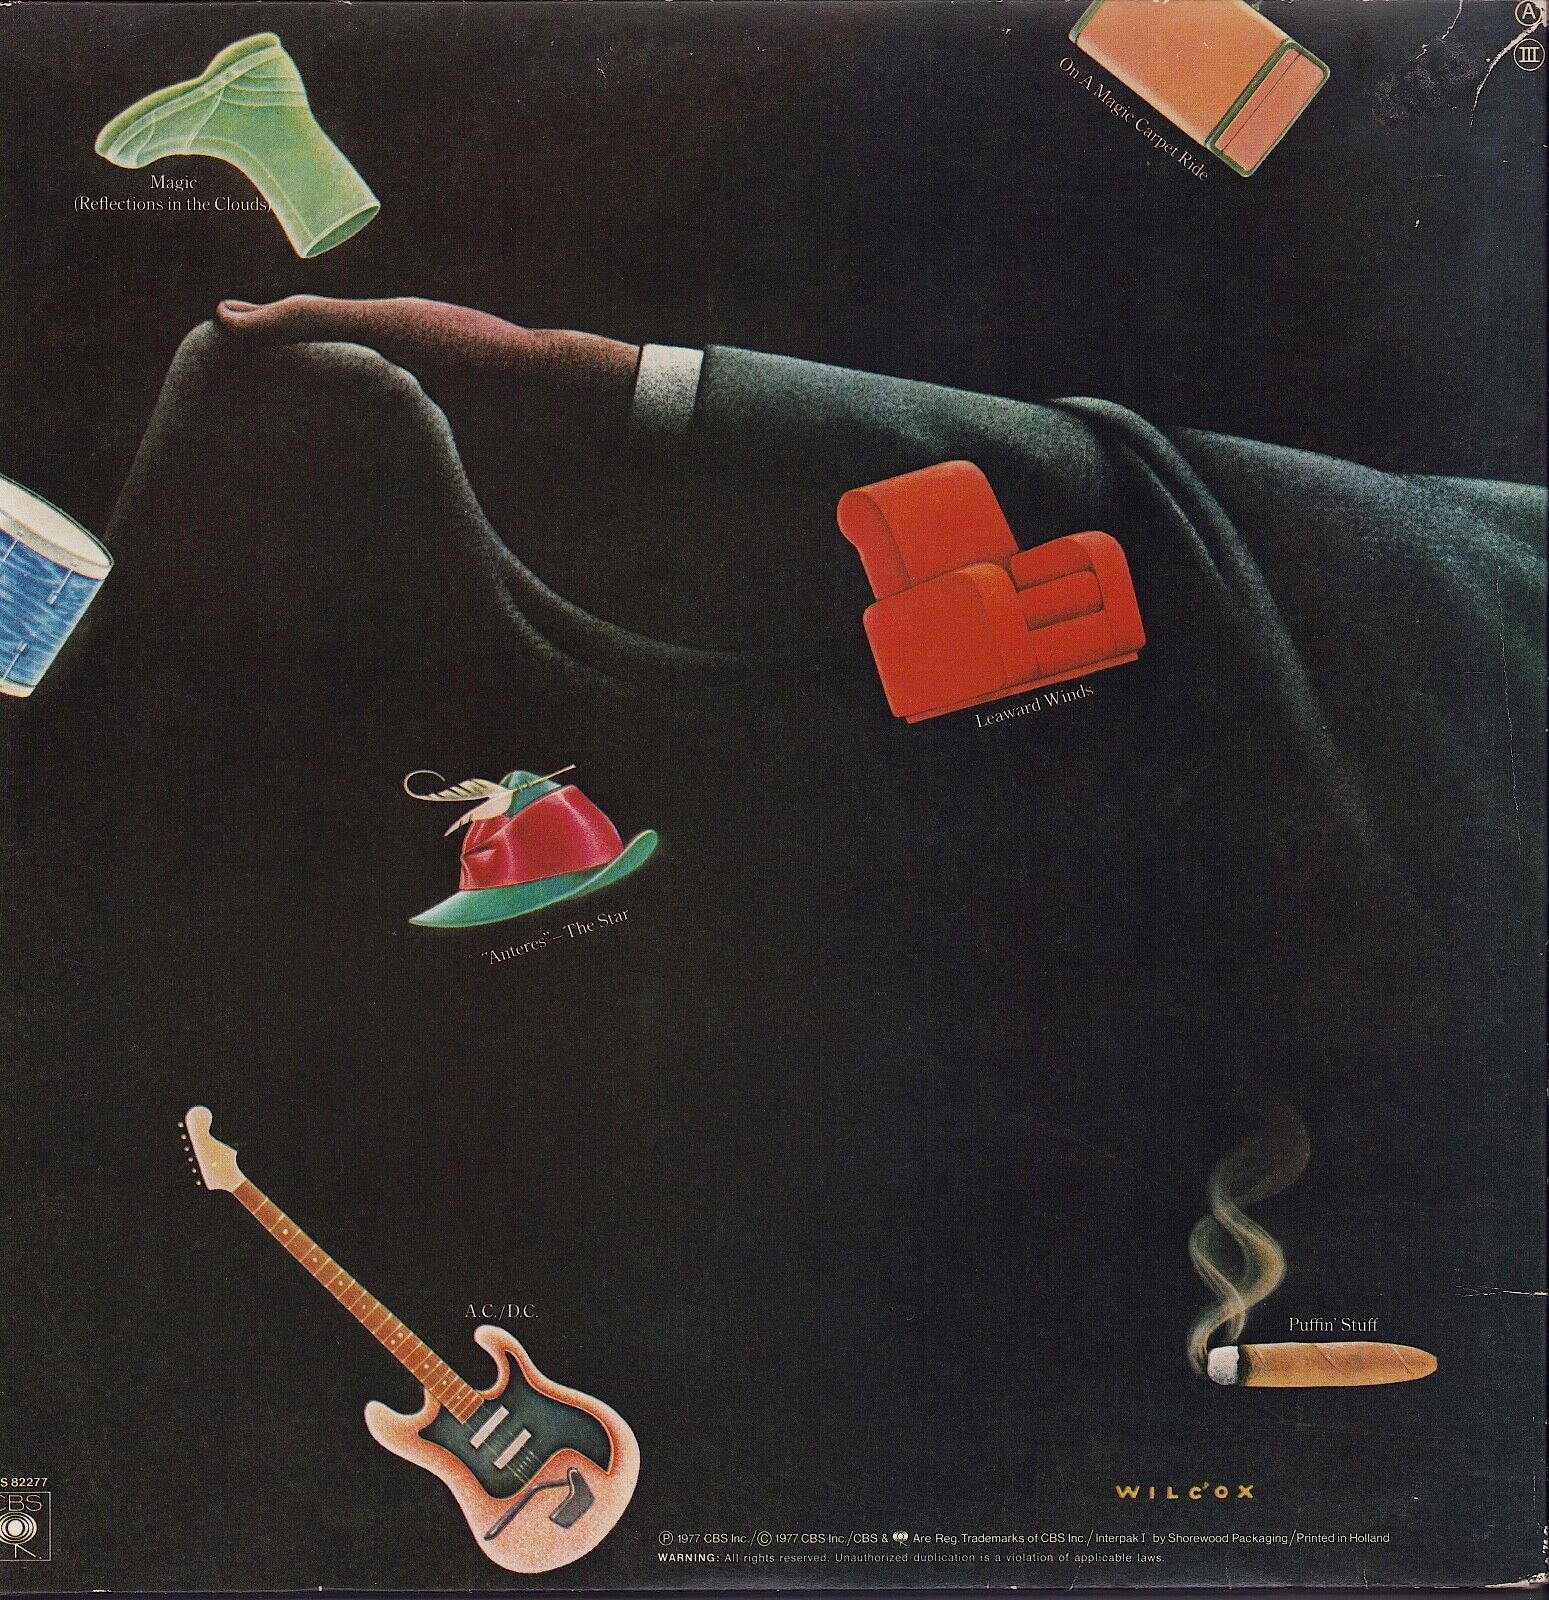 Billy Cobham ‎- Magic Vinyl LP